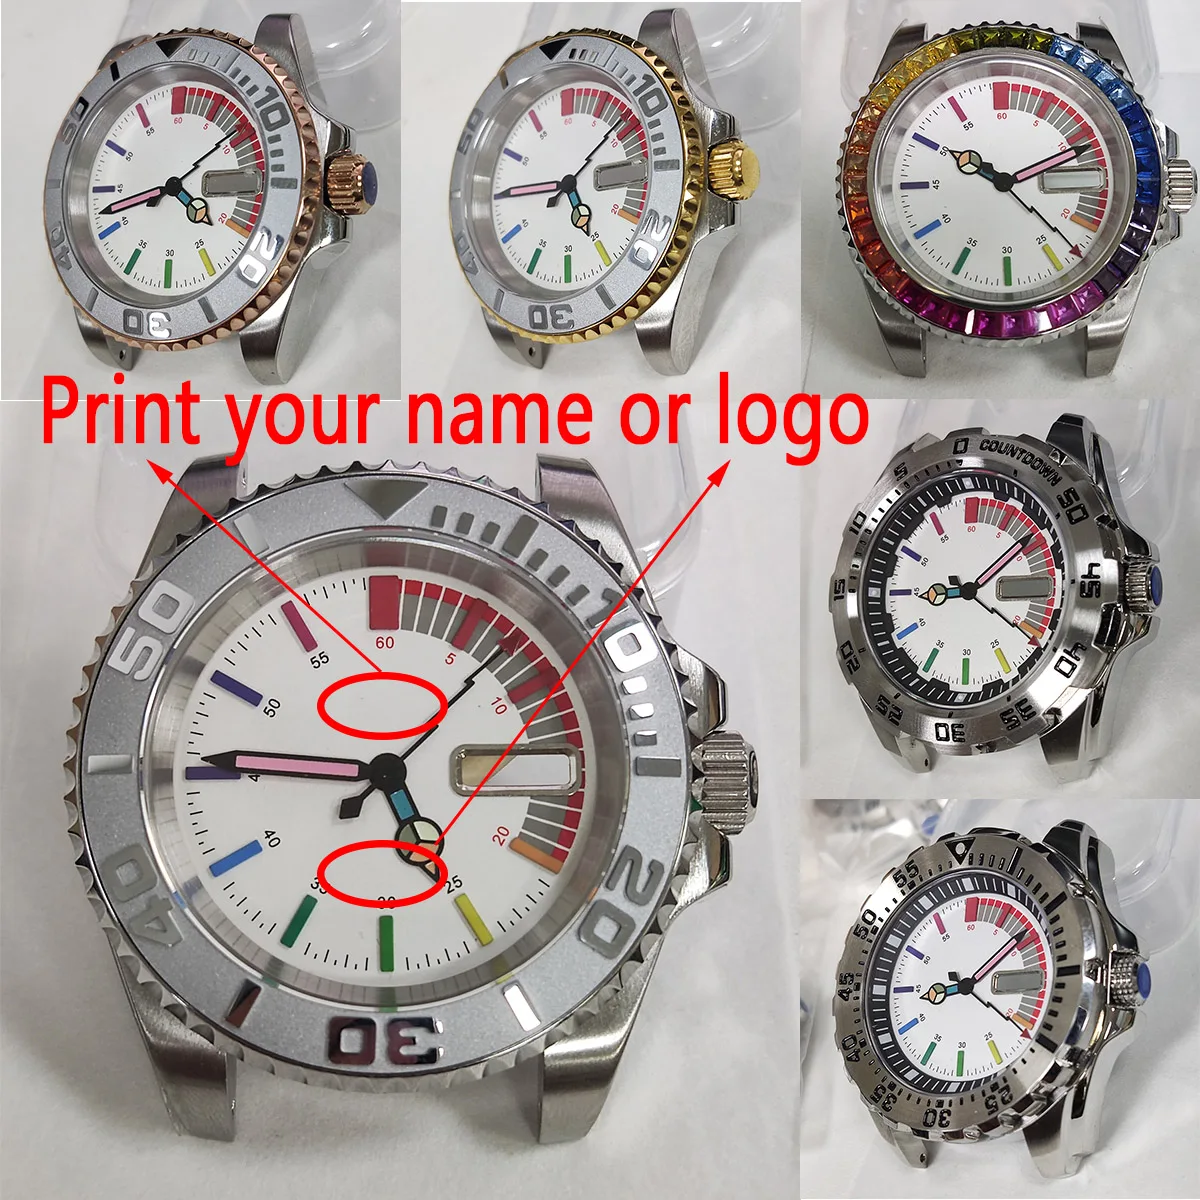 

custom logo nh35 case New watch men watch rainbow dial nh36 watch case nh36 dial skx007 diving watch modify part nh36 movement 2